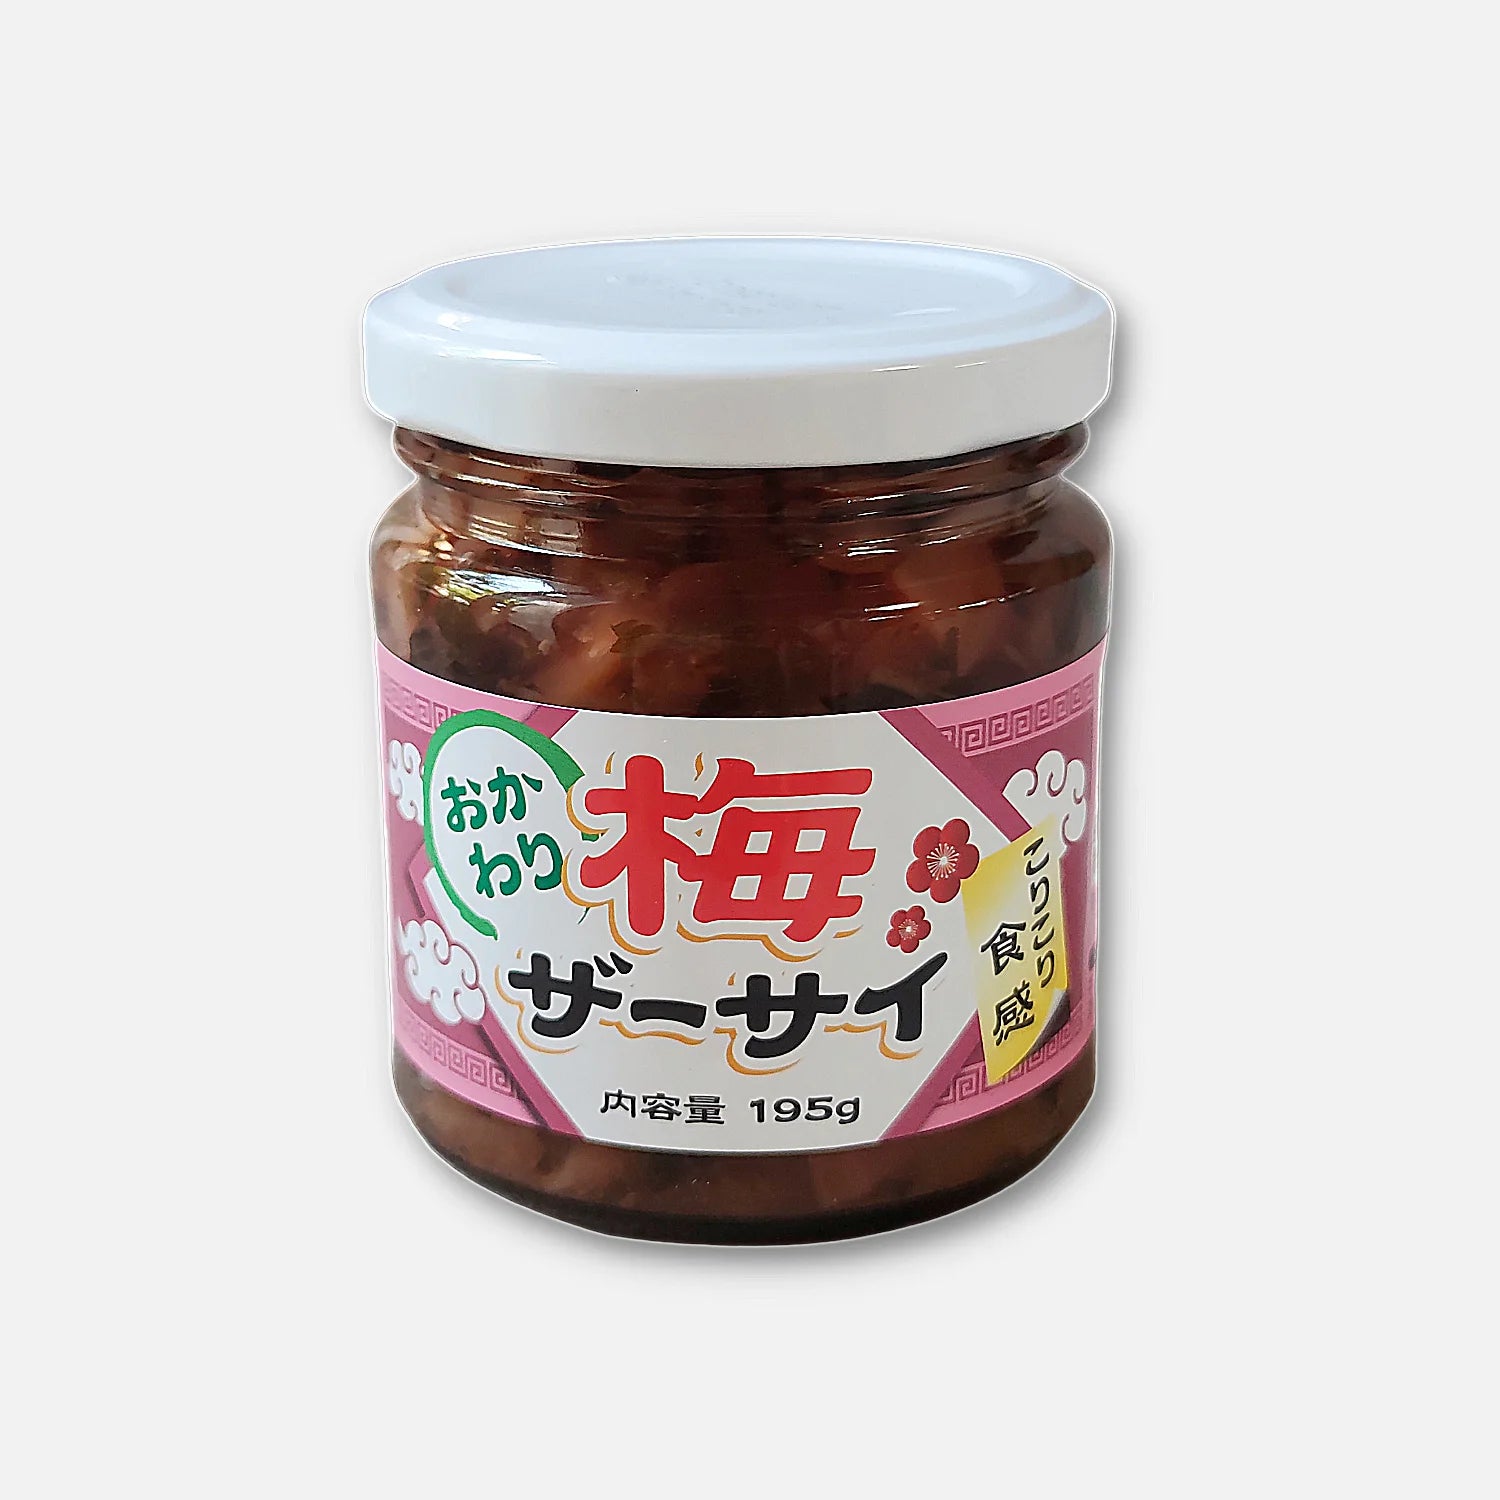 Kobe Bussan Pickled Ume Plum & Zasai 195g - Buy Me Japan